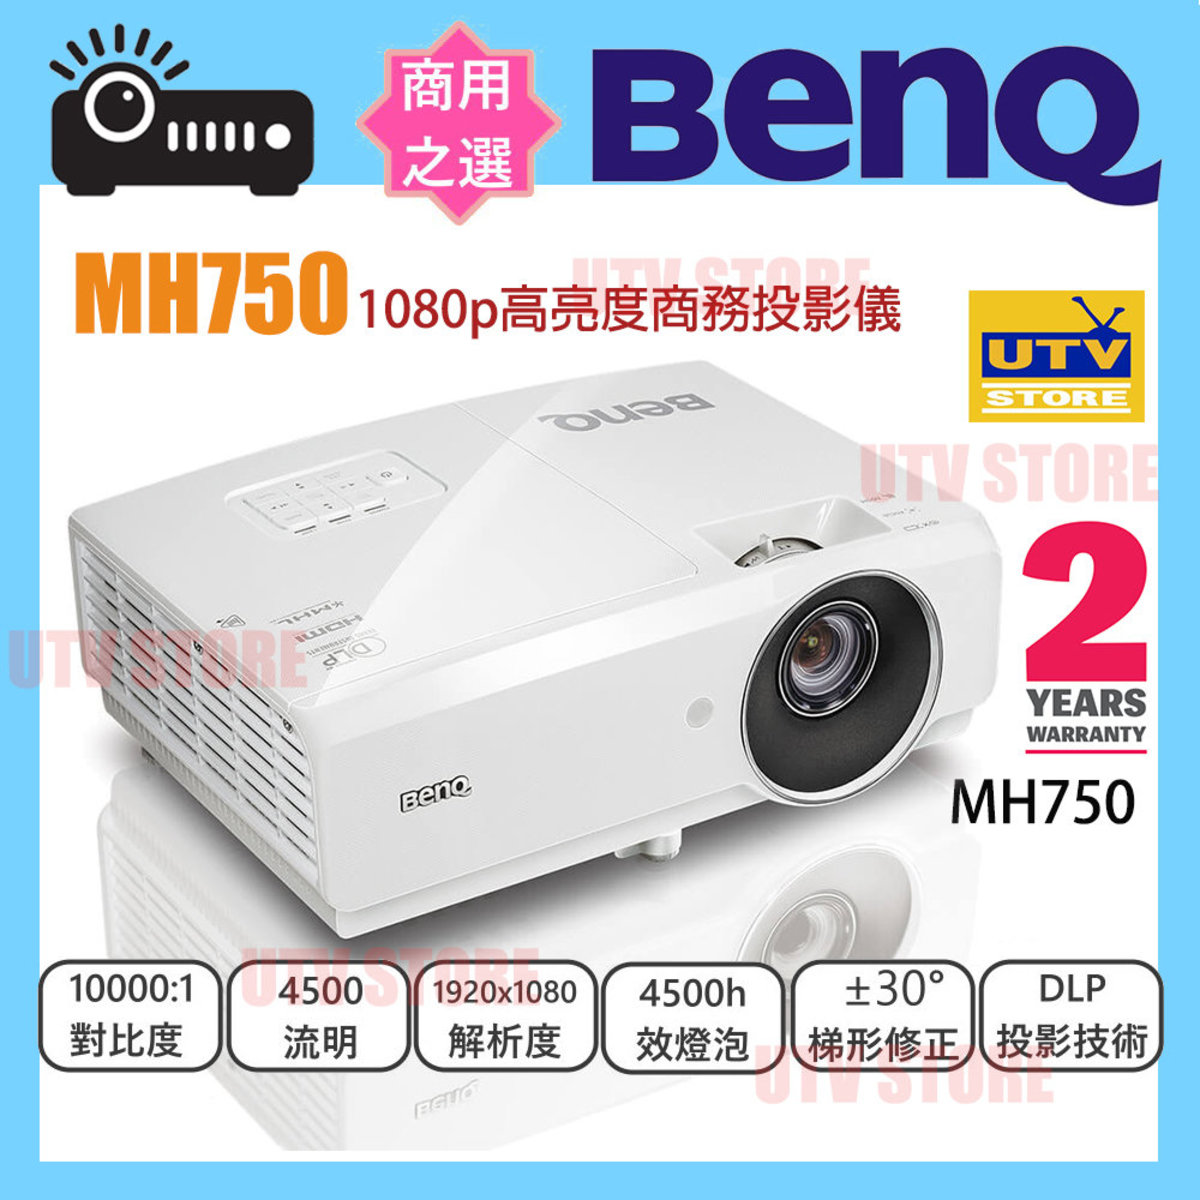 BENQ | MH750 High 1080p Business HKTVmall The Largest HK Shopping Platform